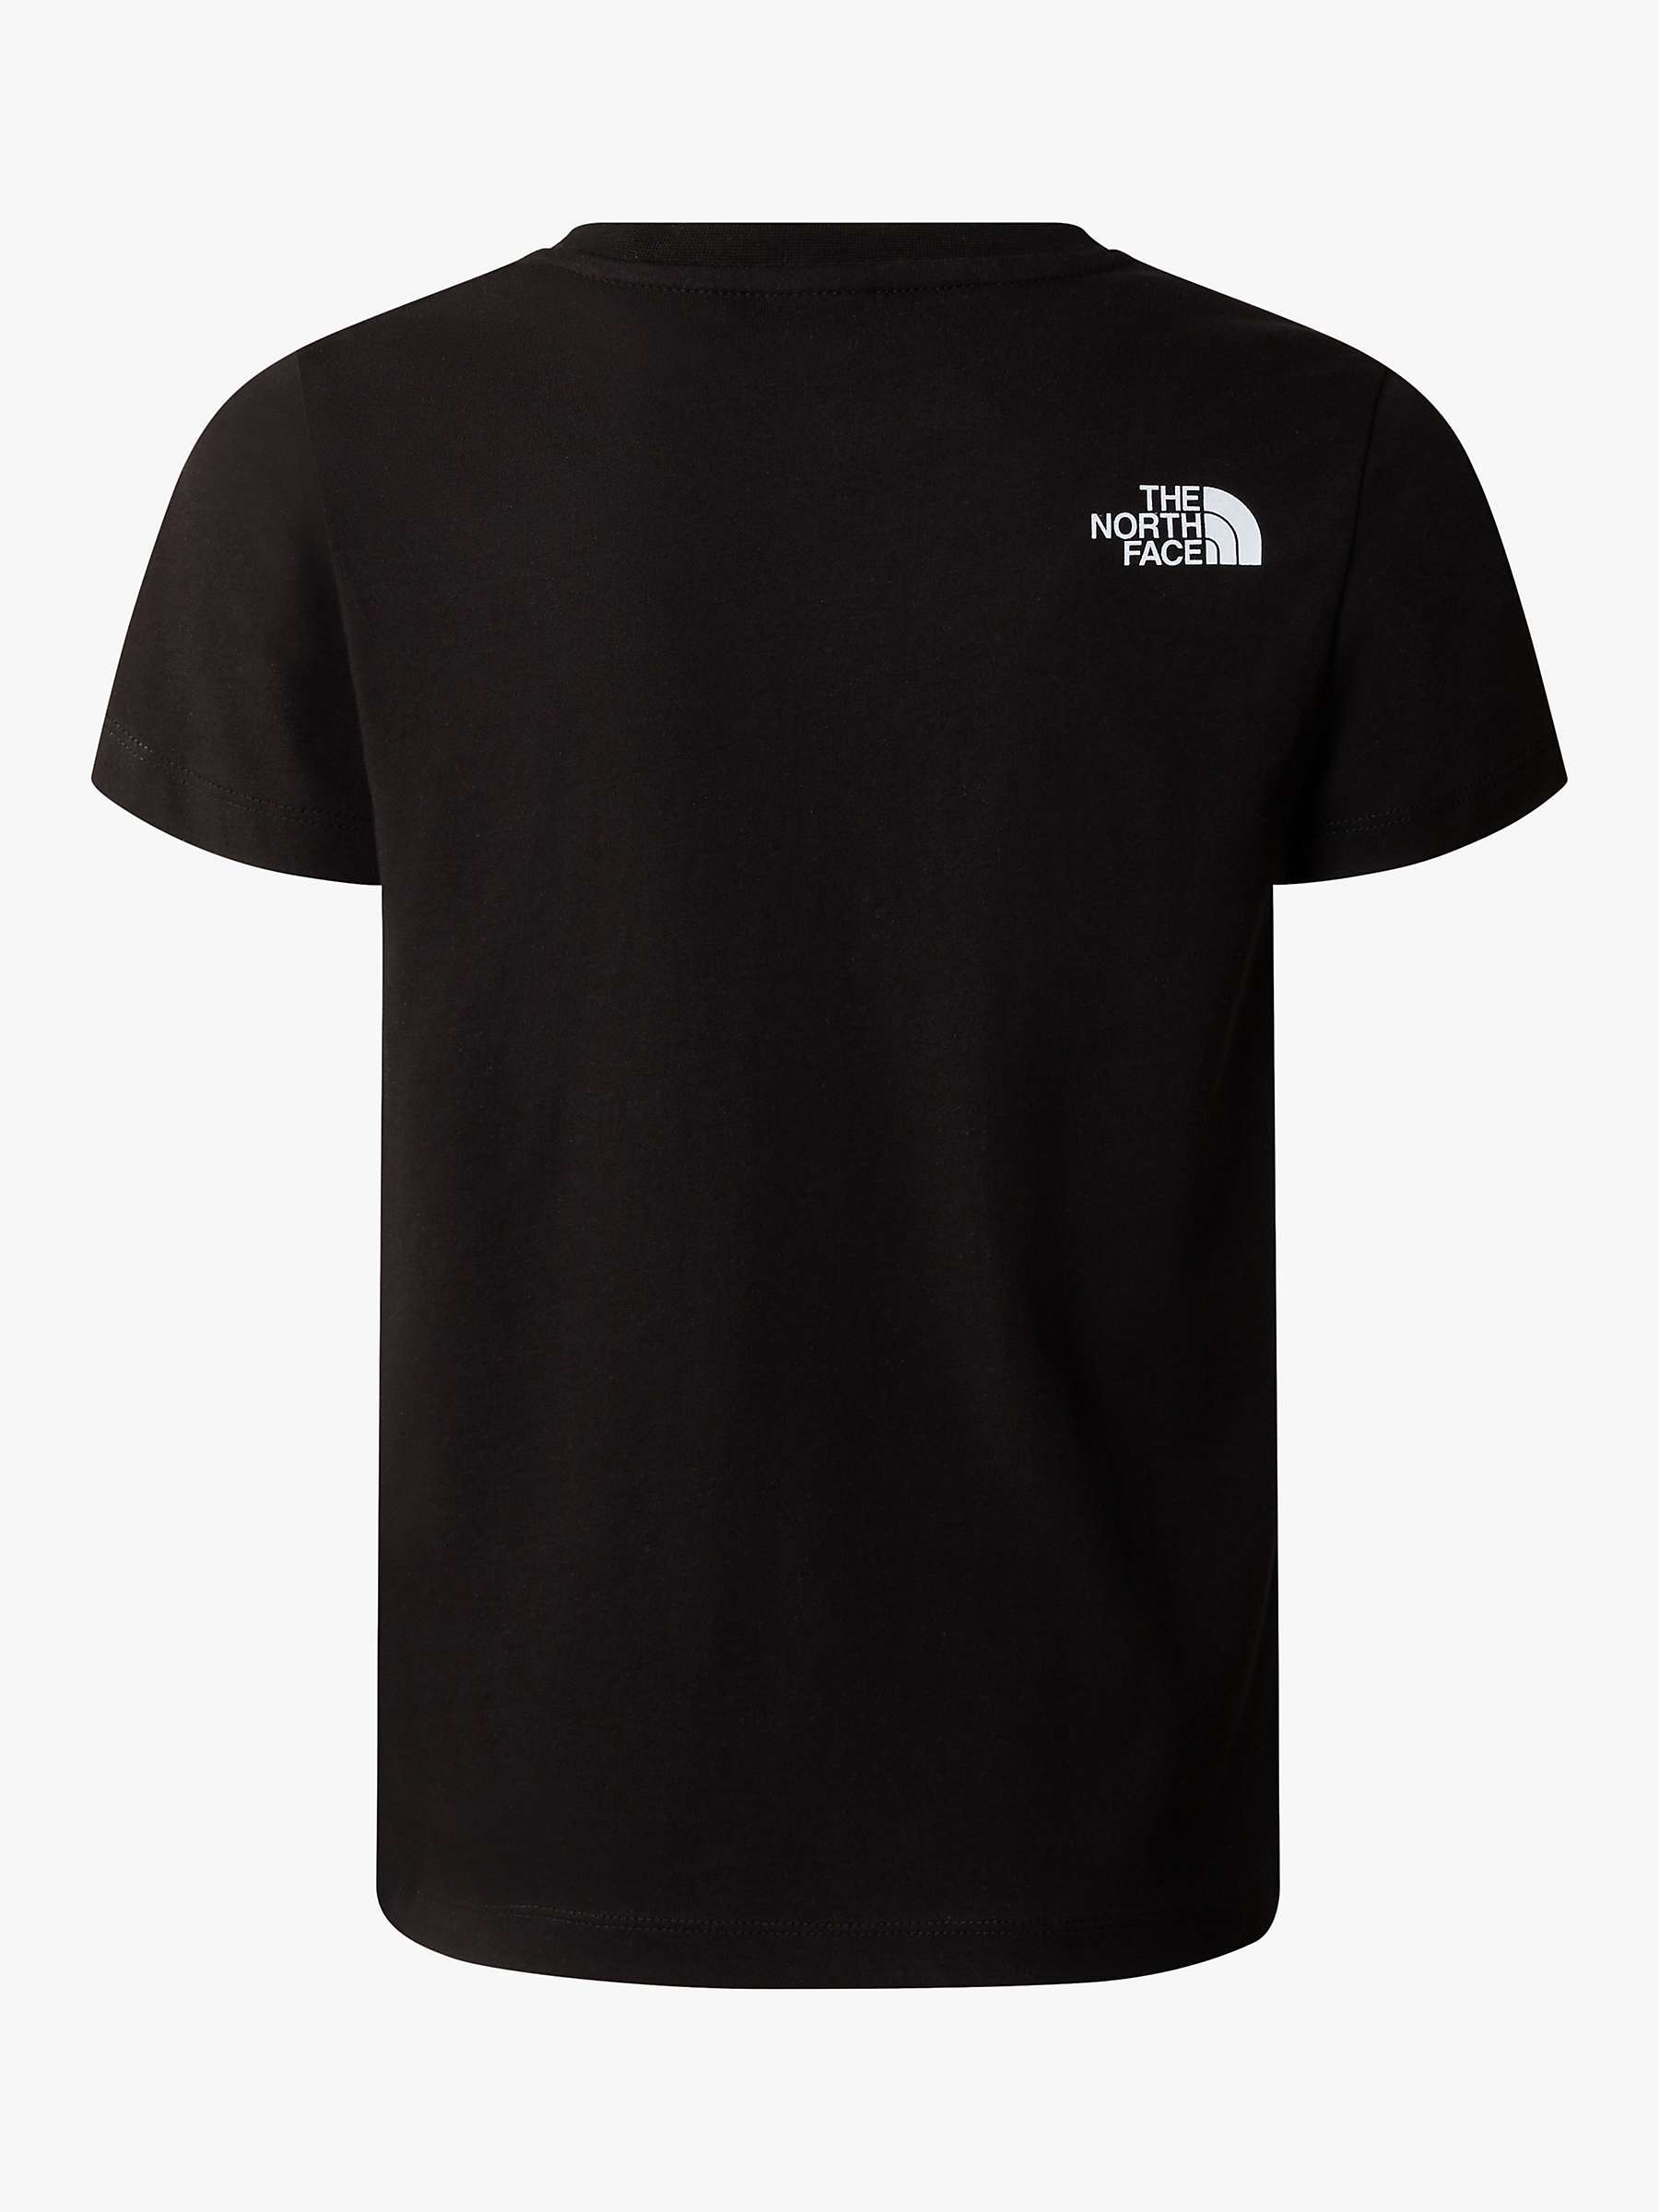 Buy The North Face Kids' New Logo Short Sleeve T-Shirt, Black Online at johnlewis.com